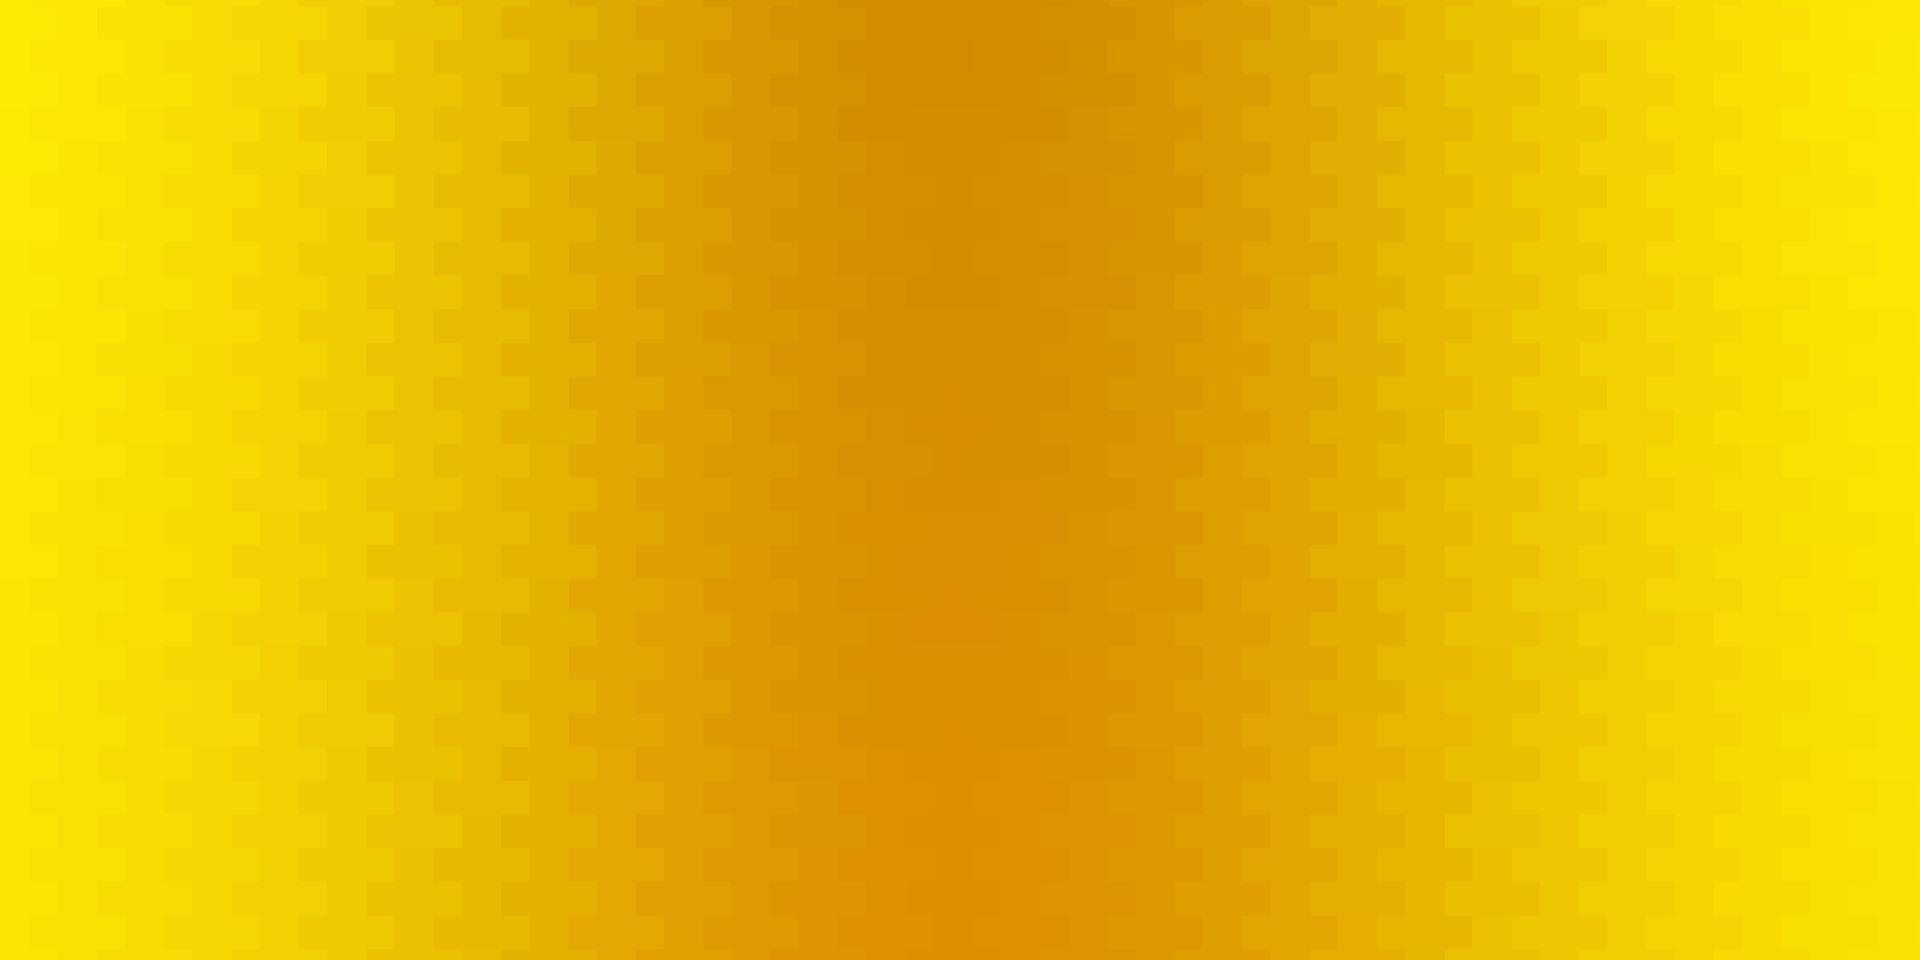 textura vector amarelo escuro em estilo retangular.